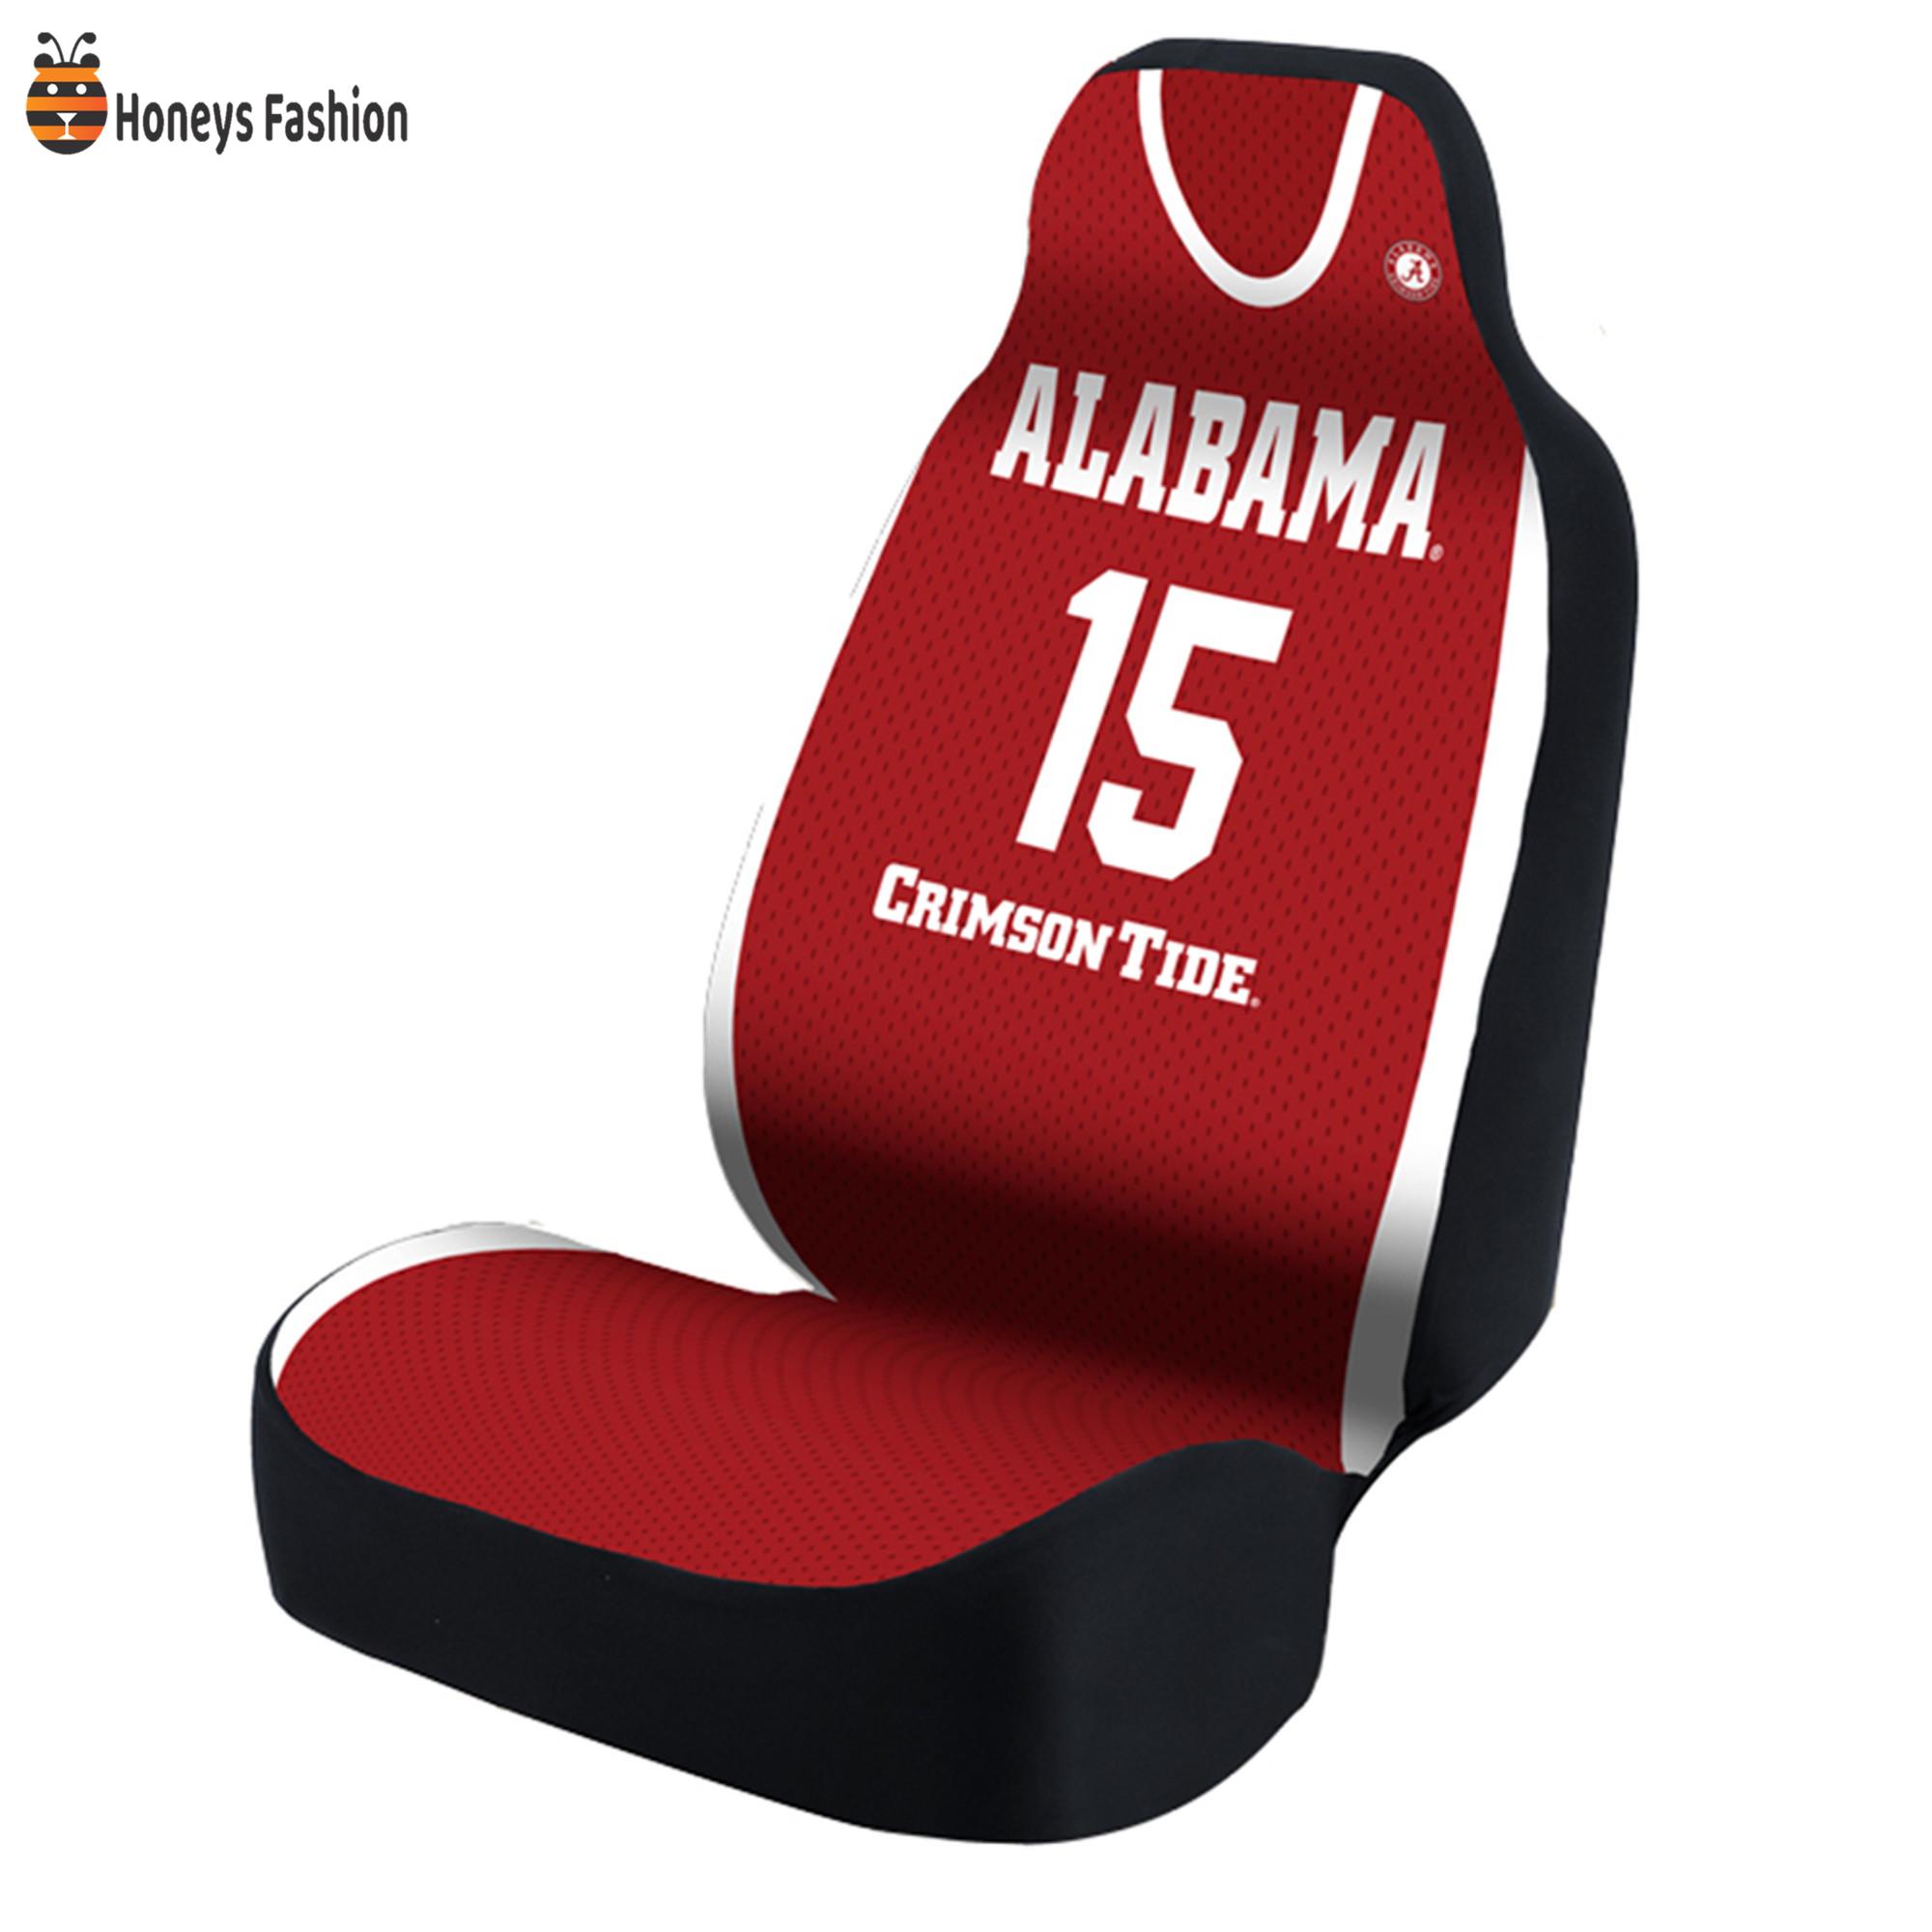 Alabama Crimson Tide Red Jersey Car Seat Cover